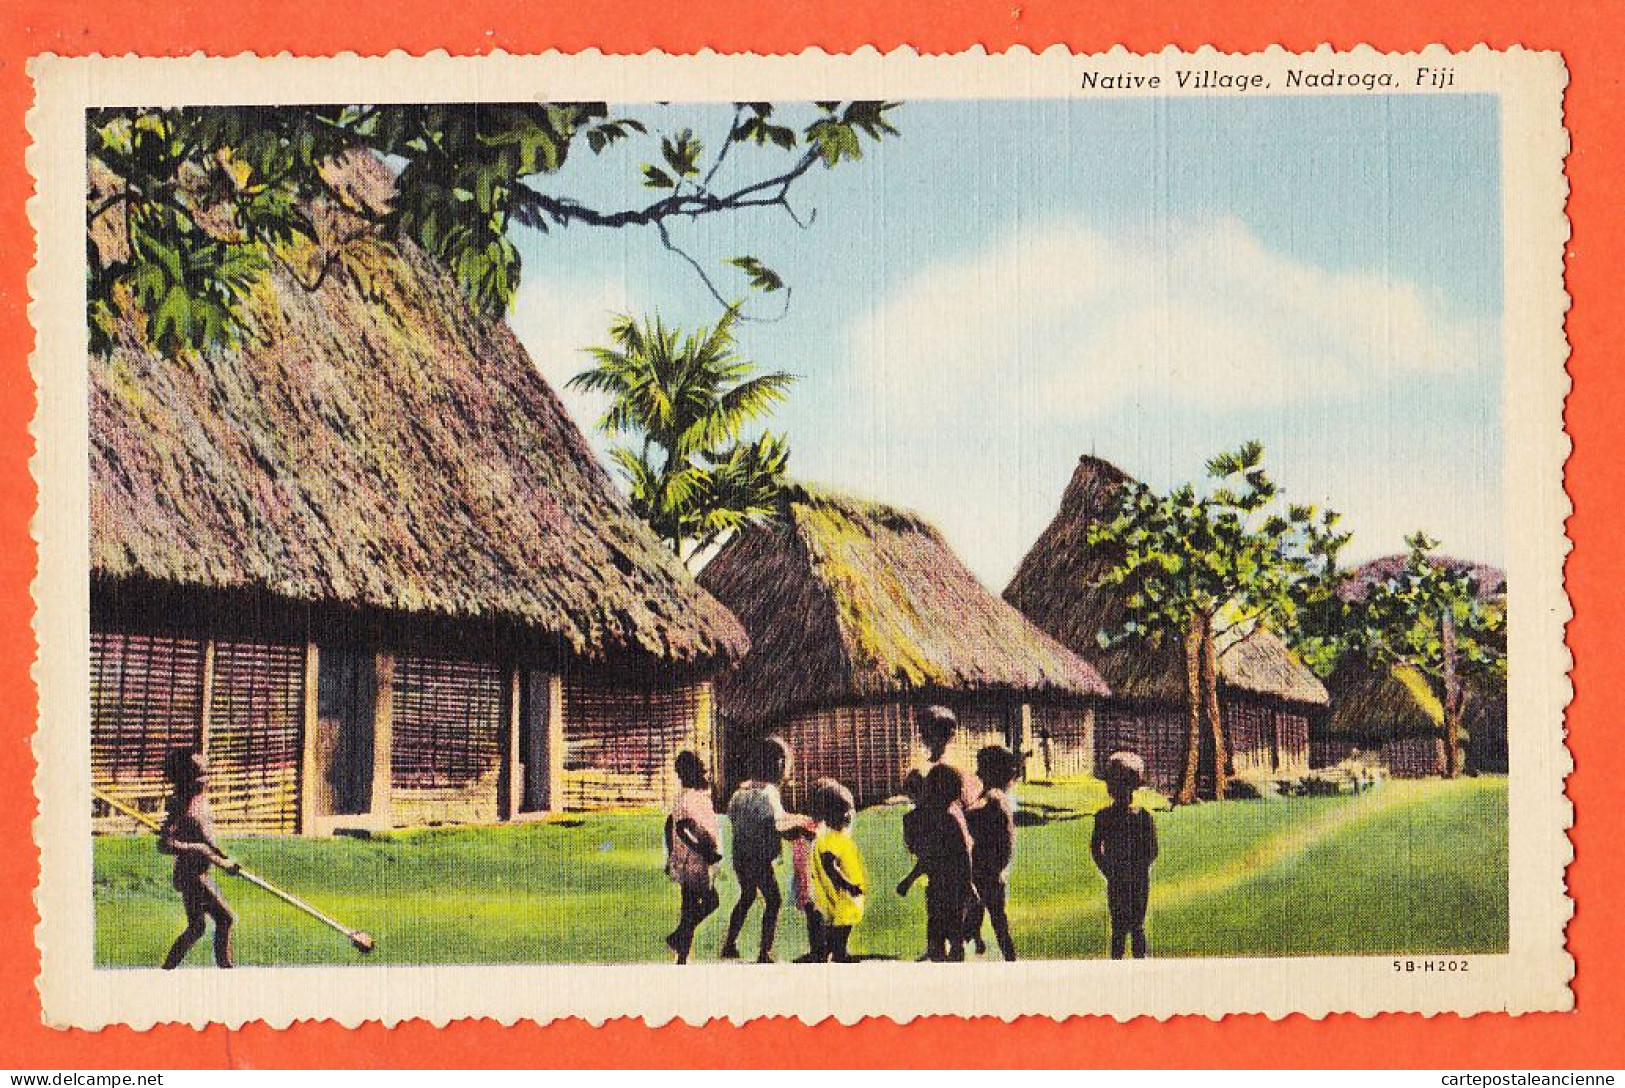 08098 ● ● NADROGA Fiji Native Village 1930s Fidji 5B-H202 - Fidschi